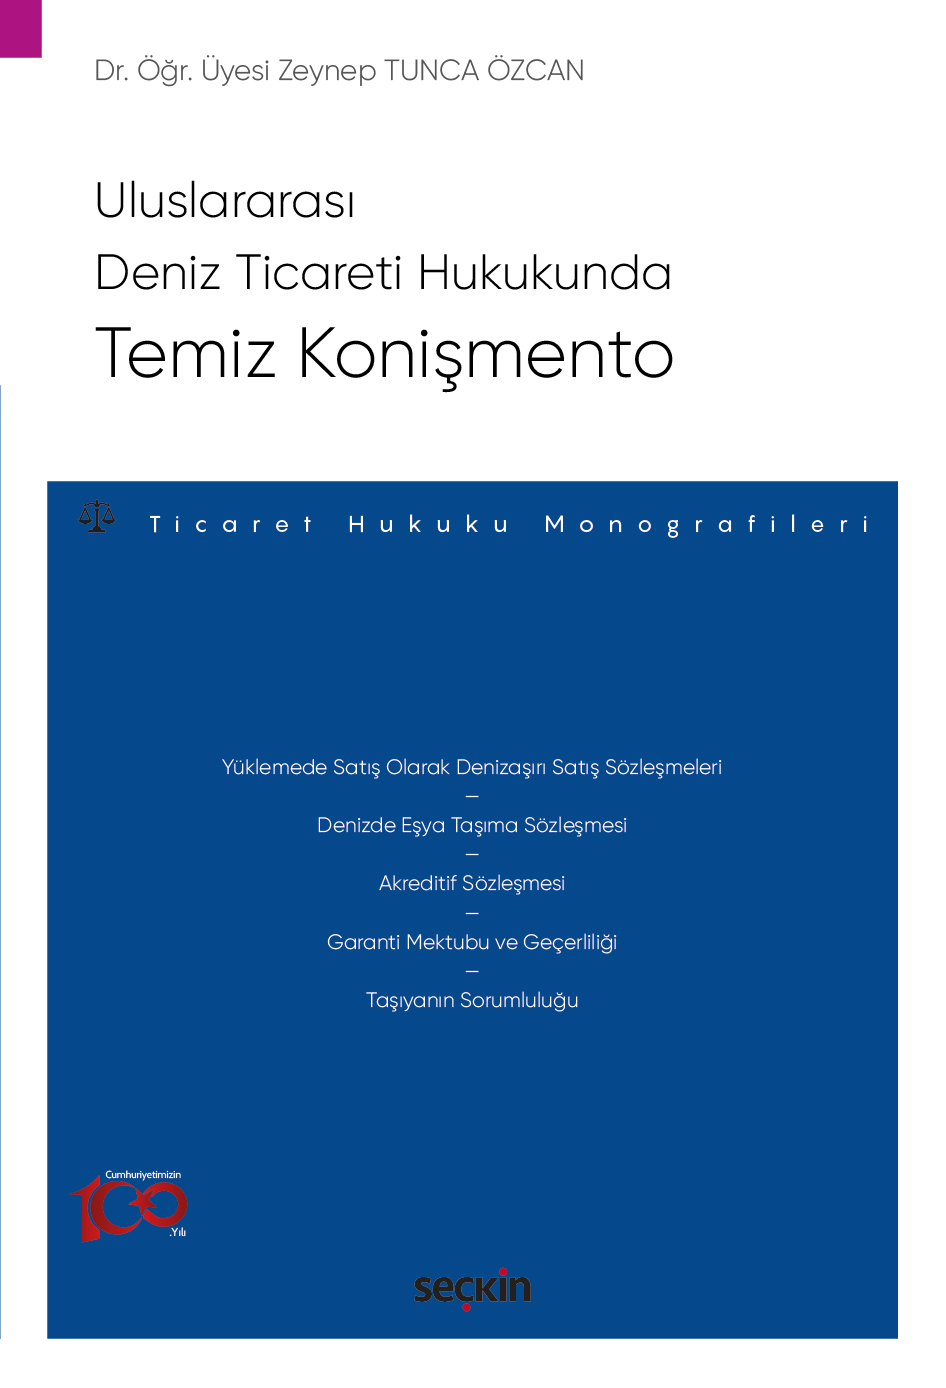 Uluslararası Deniz Ticareti Hukukunda - Temiz Konişmento - Ticaret Hukuku Monografileri